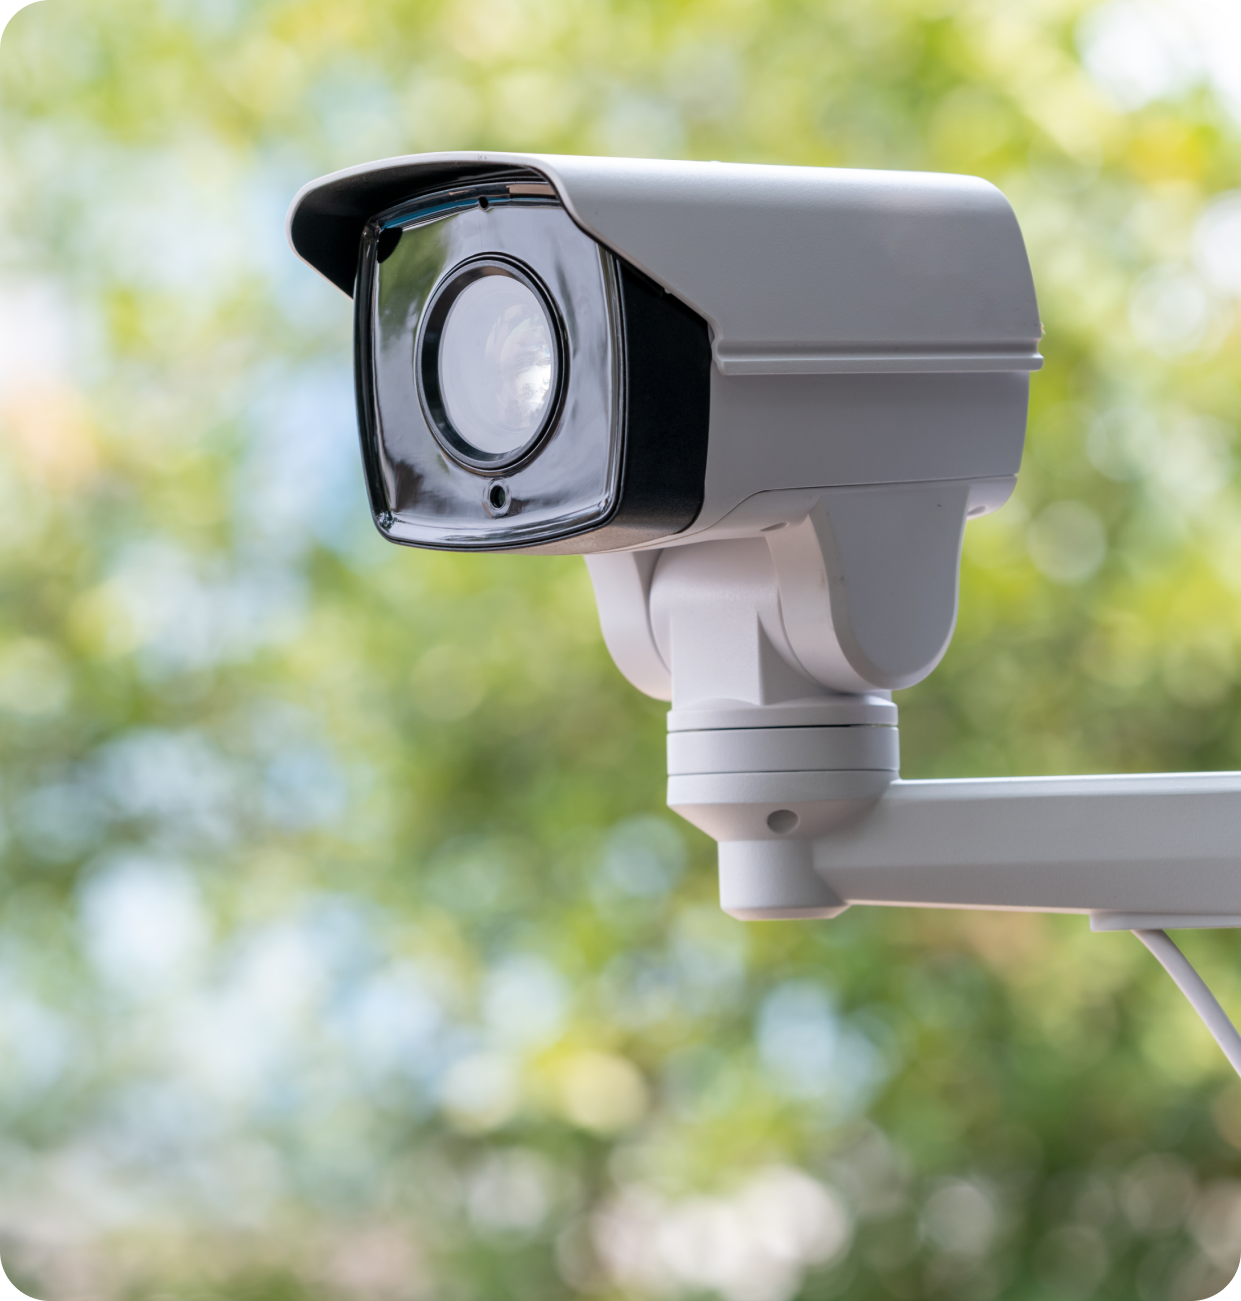 Outdoor Security Cameras - PasWord Protection